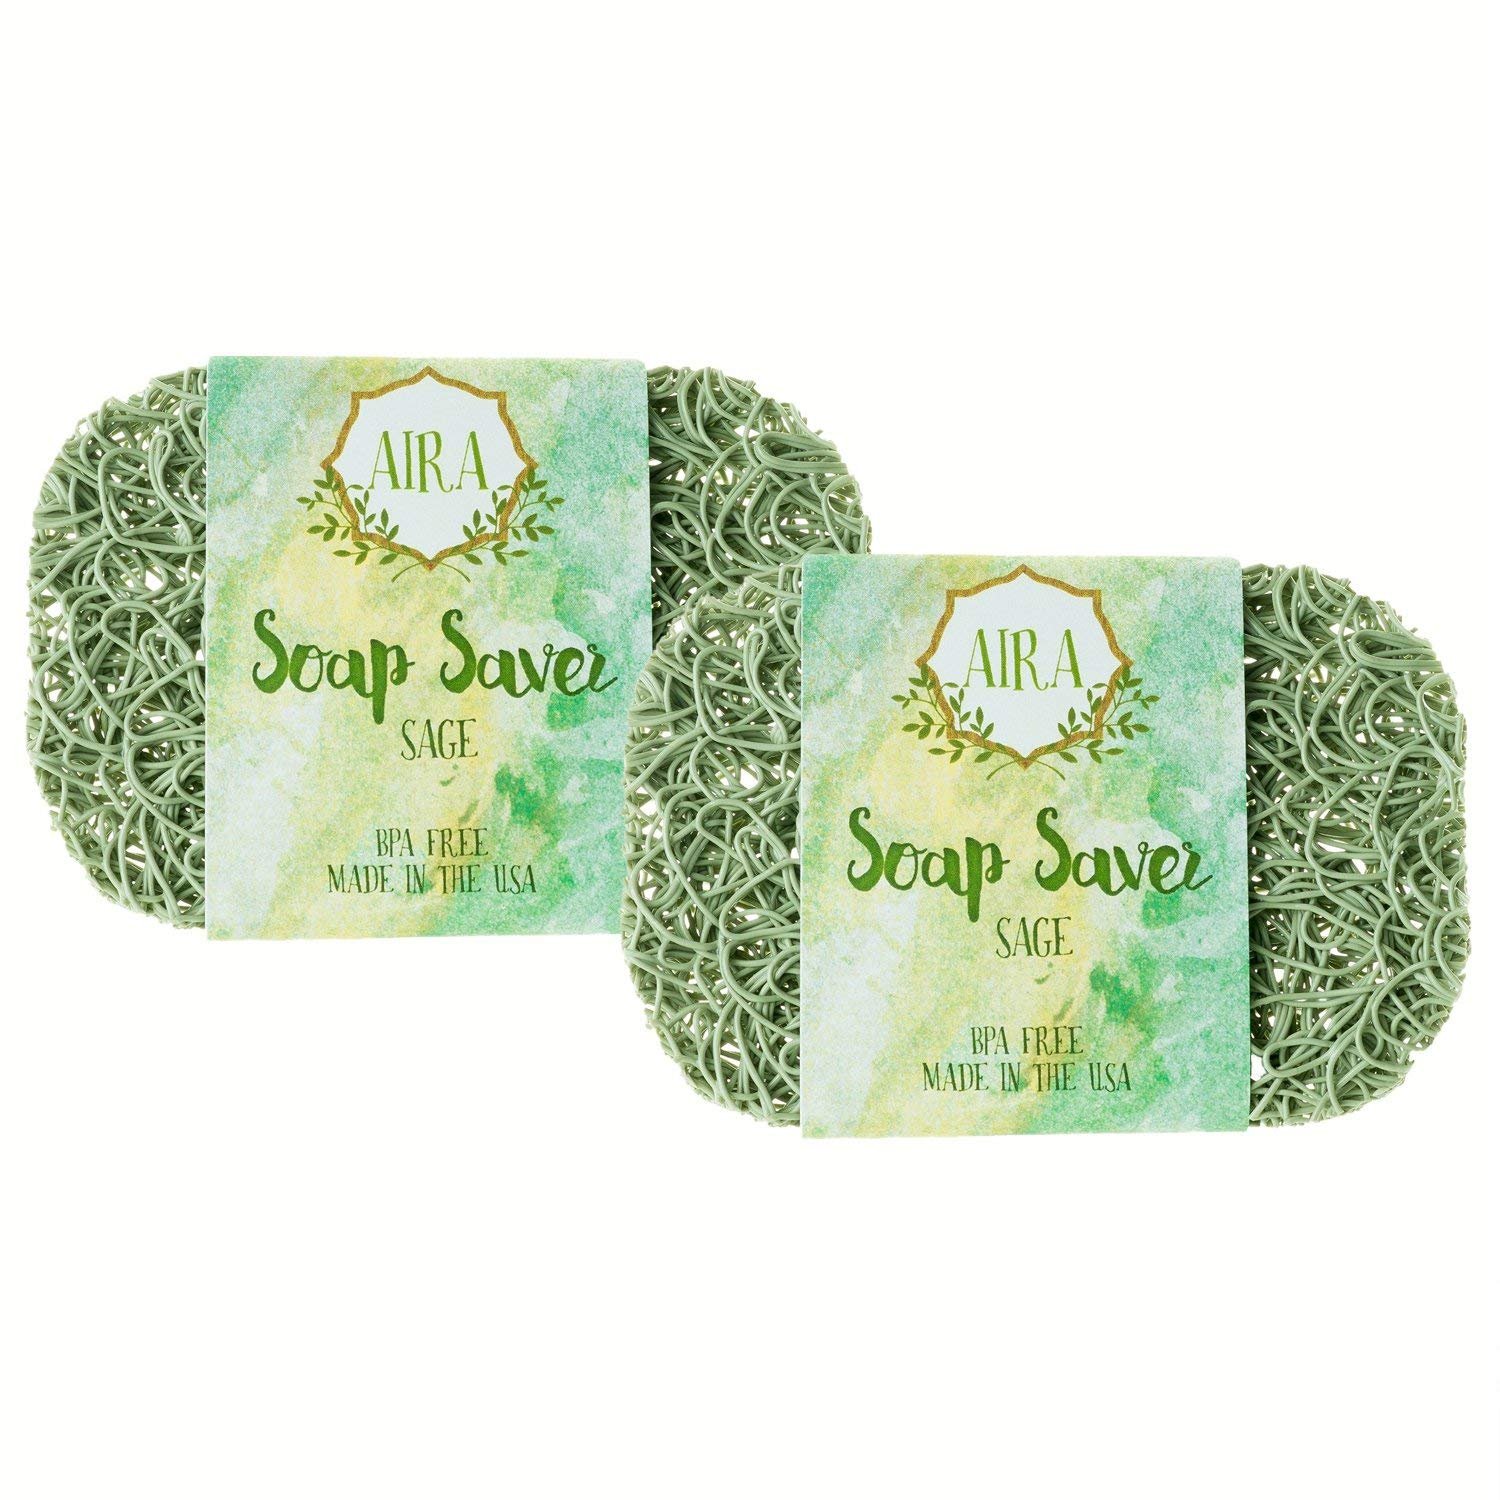 Aira Soap Saver BPA Free Soap Lift Soap Dish Holder Tray Bathroom TWIN PACK 